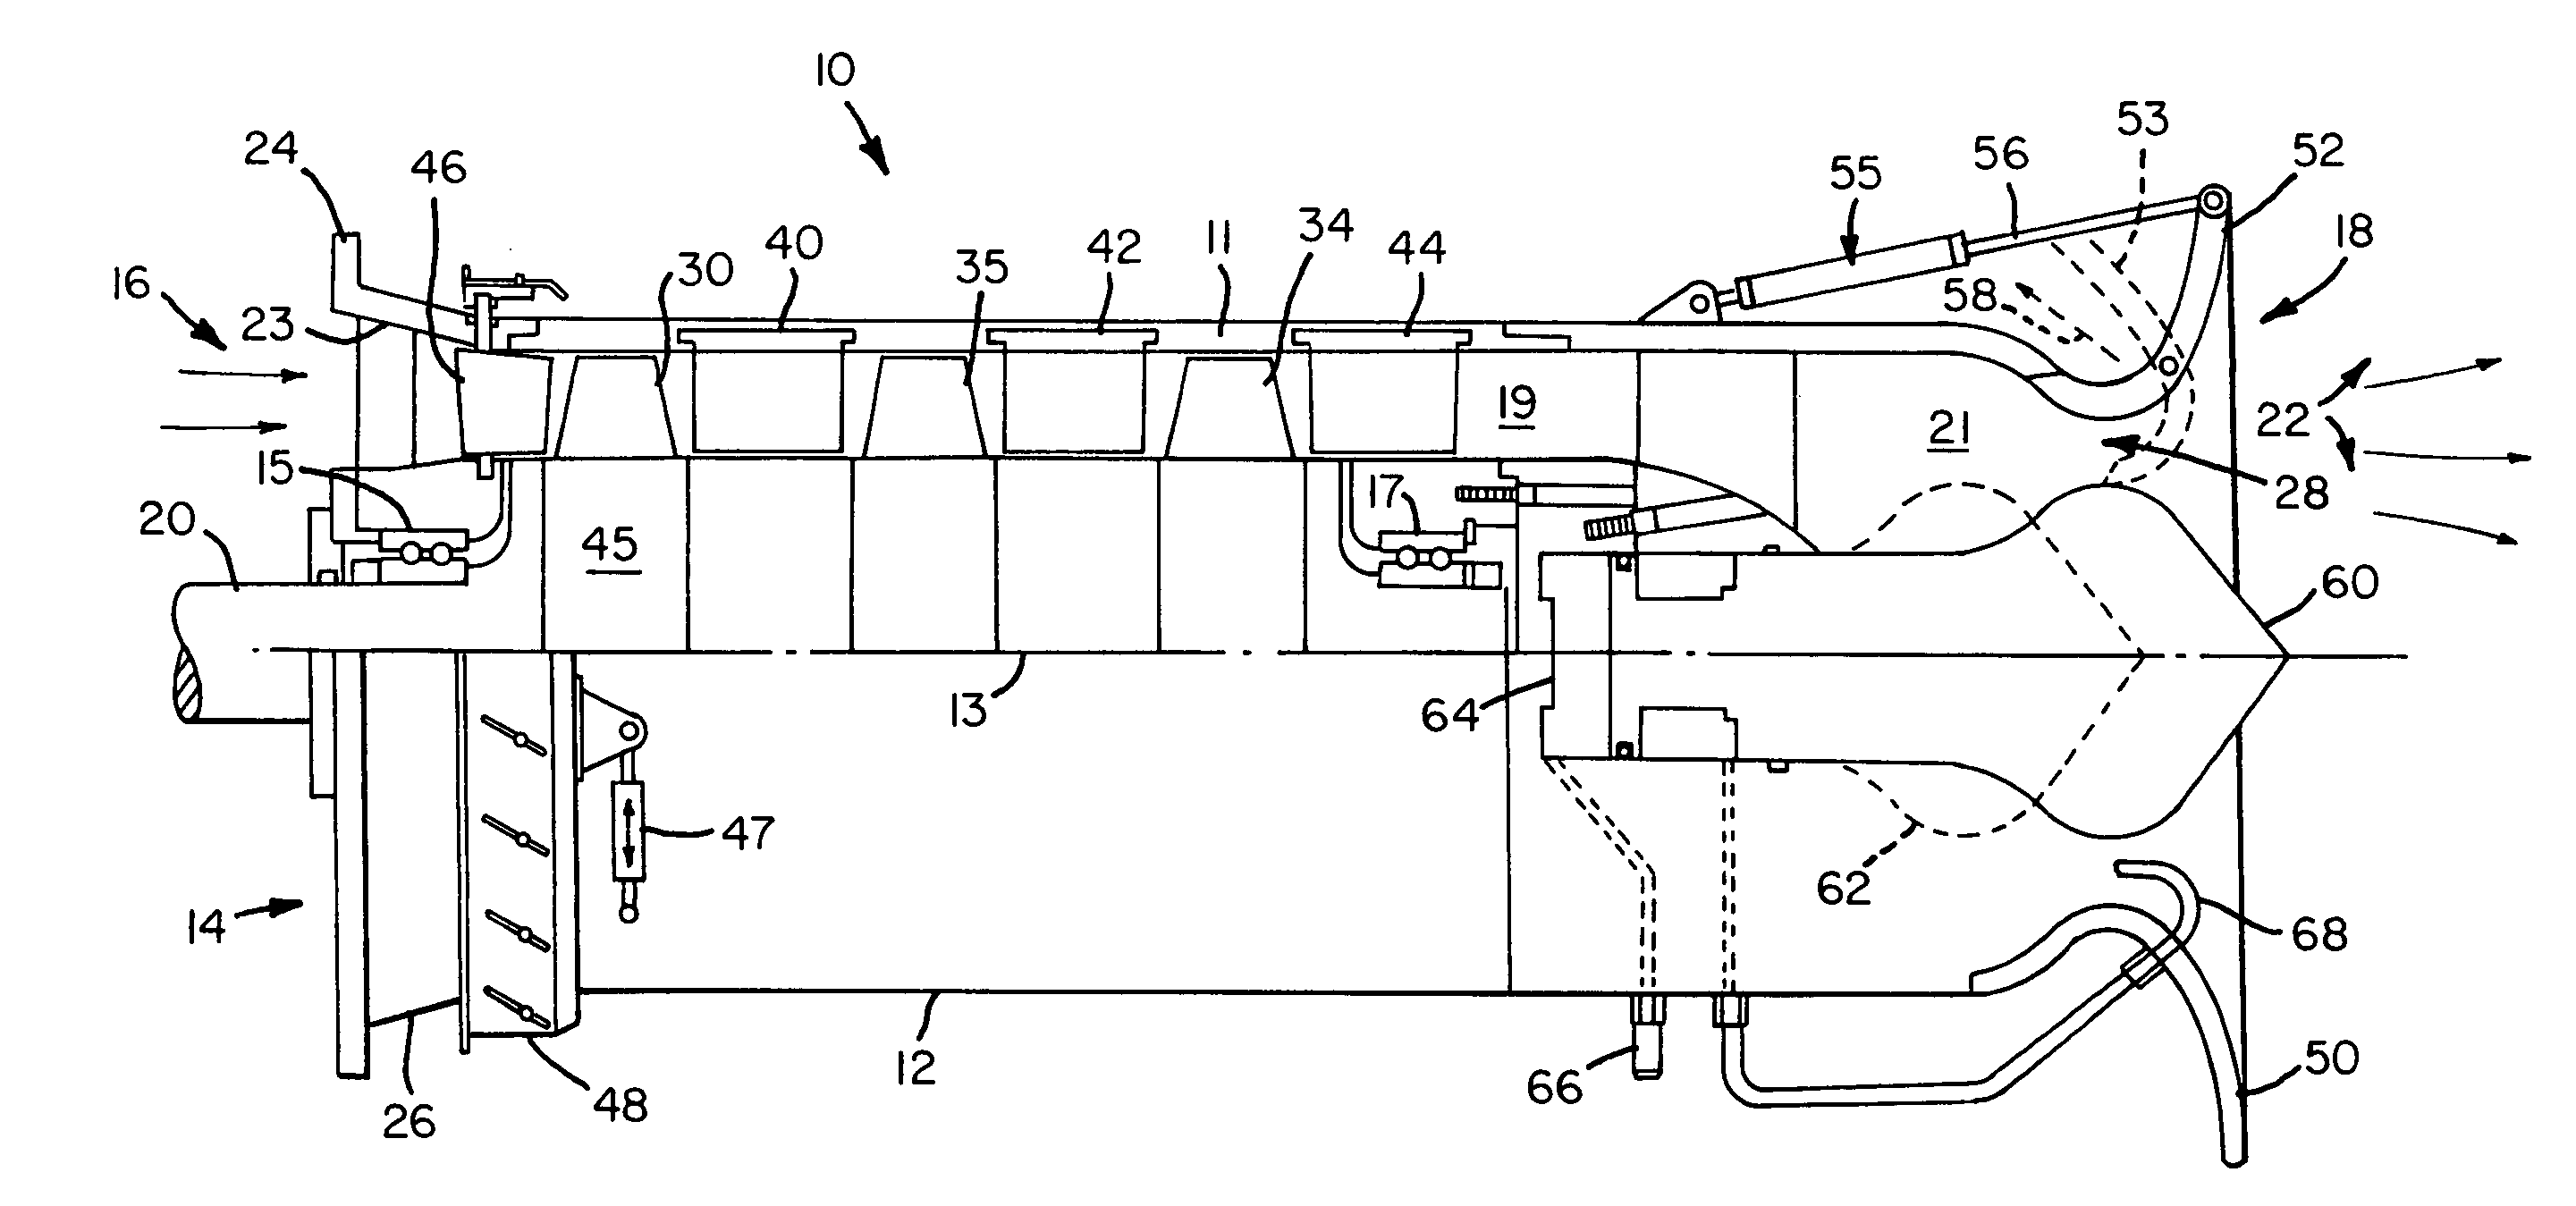 Axial flow pump or marine propulsion device